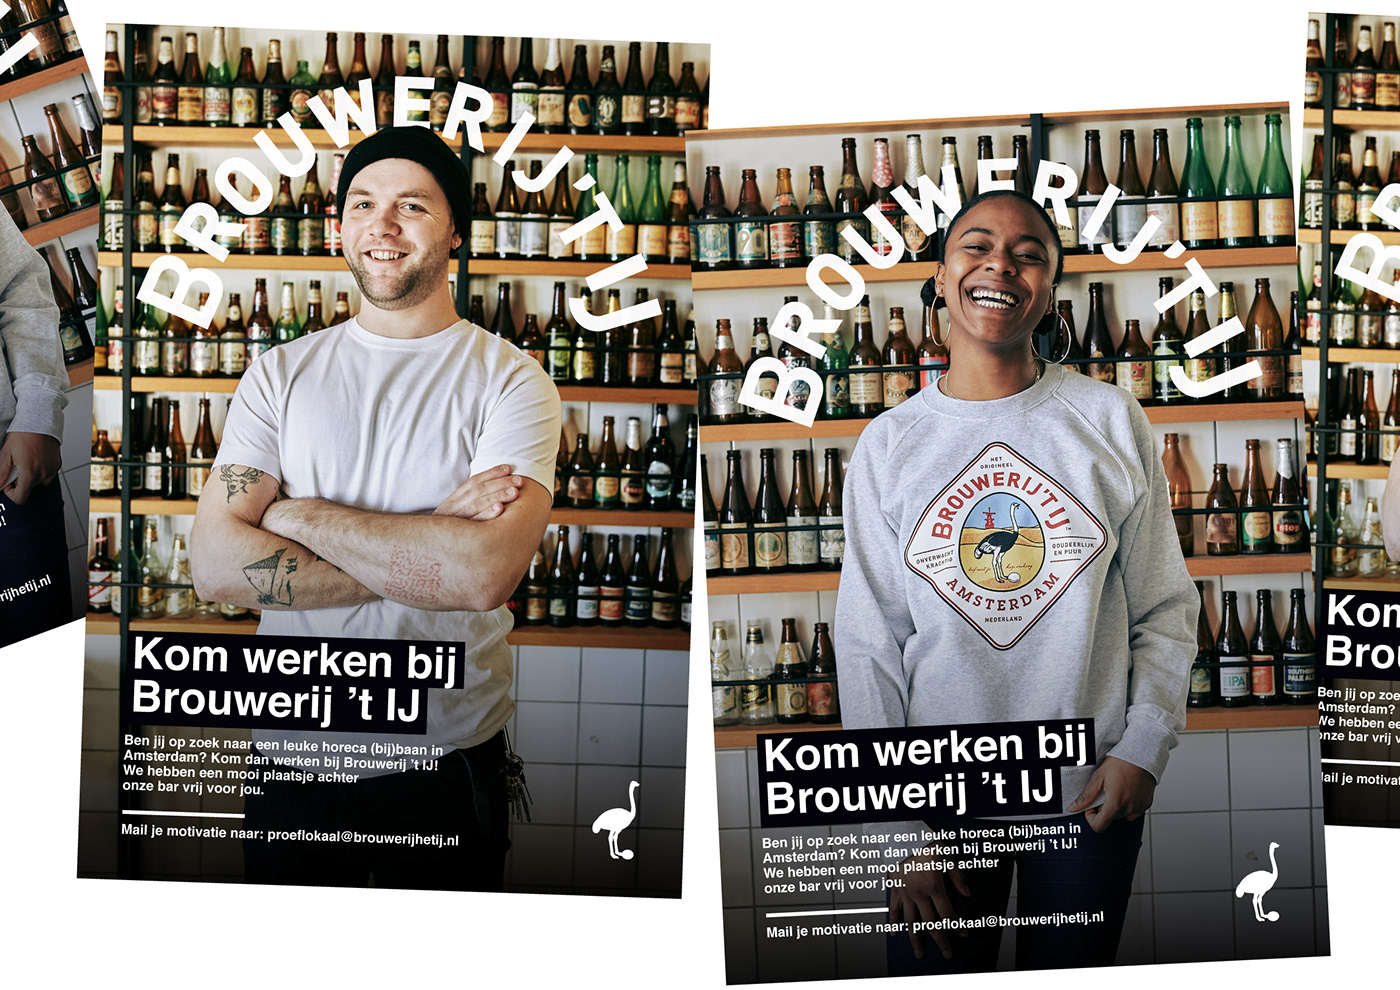 design Packaging branding  creative beer amsterdam art direction  poster graphics lettering